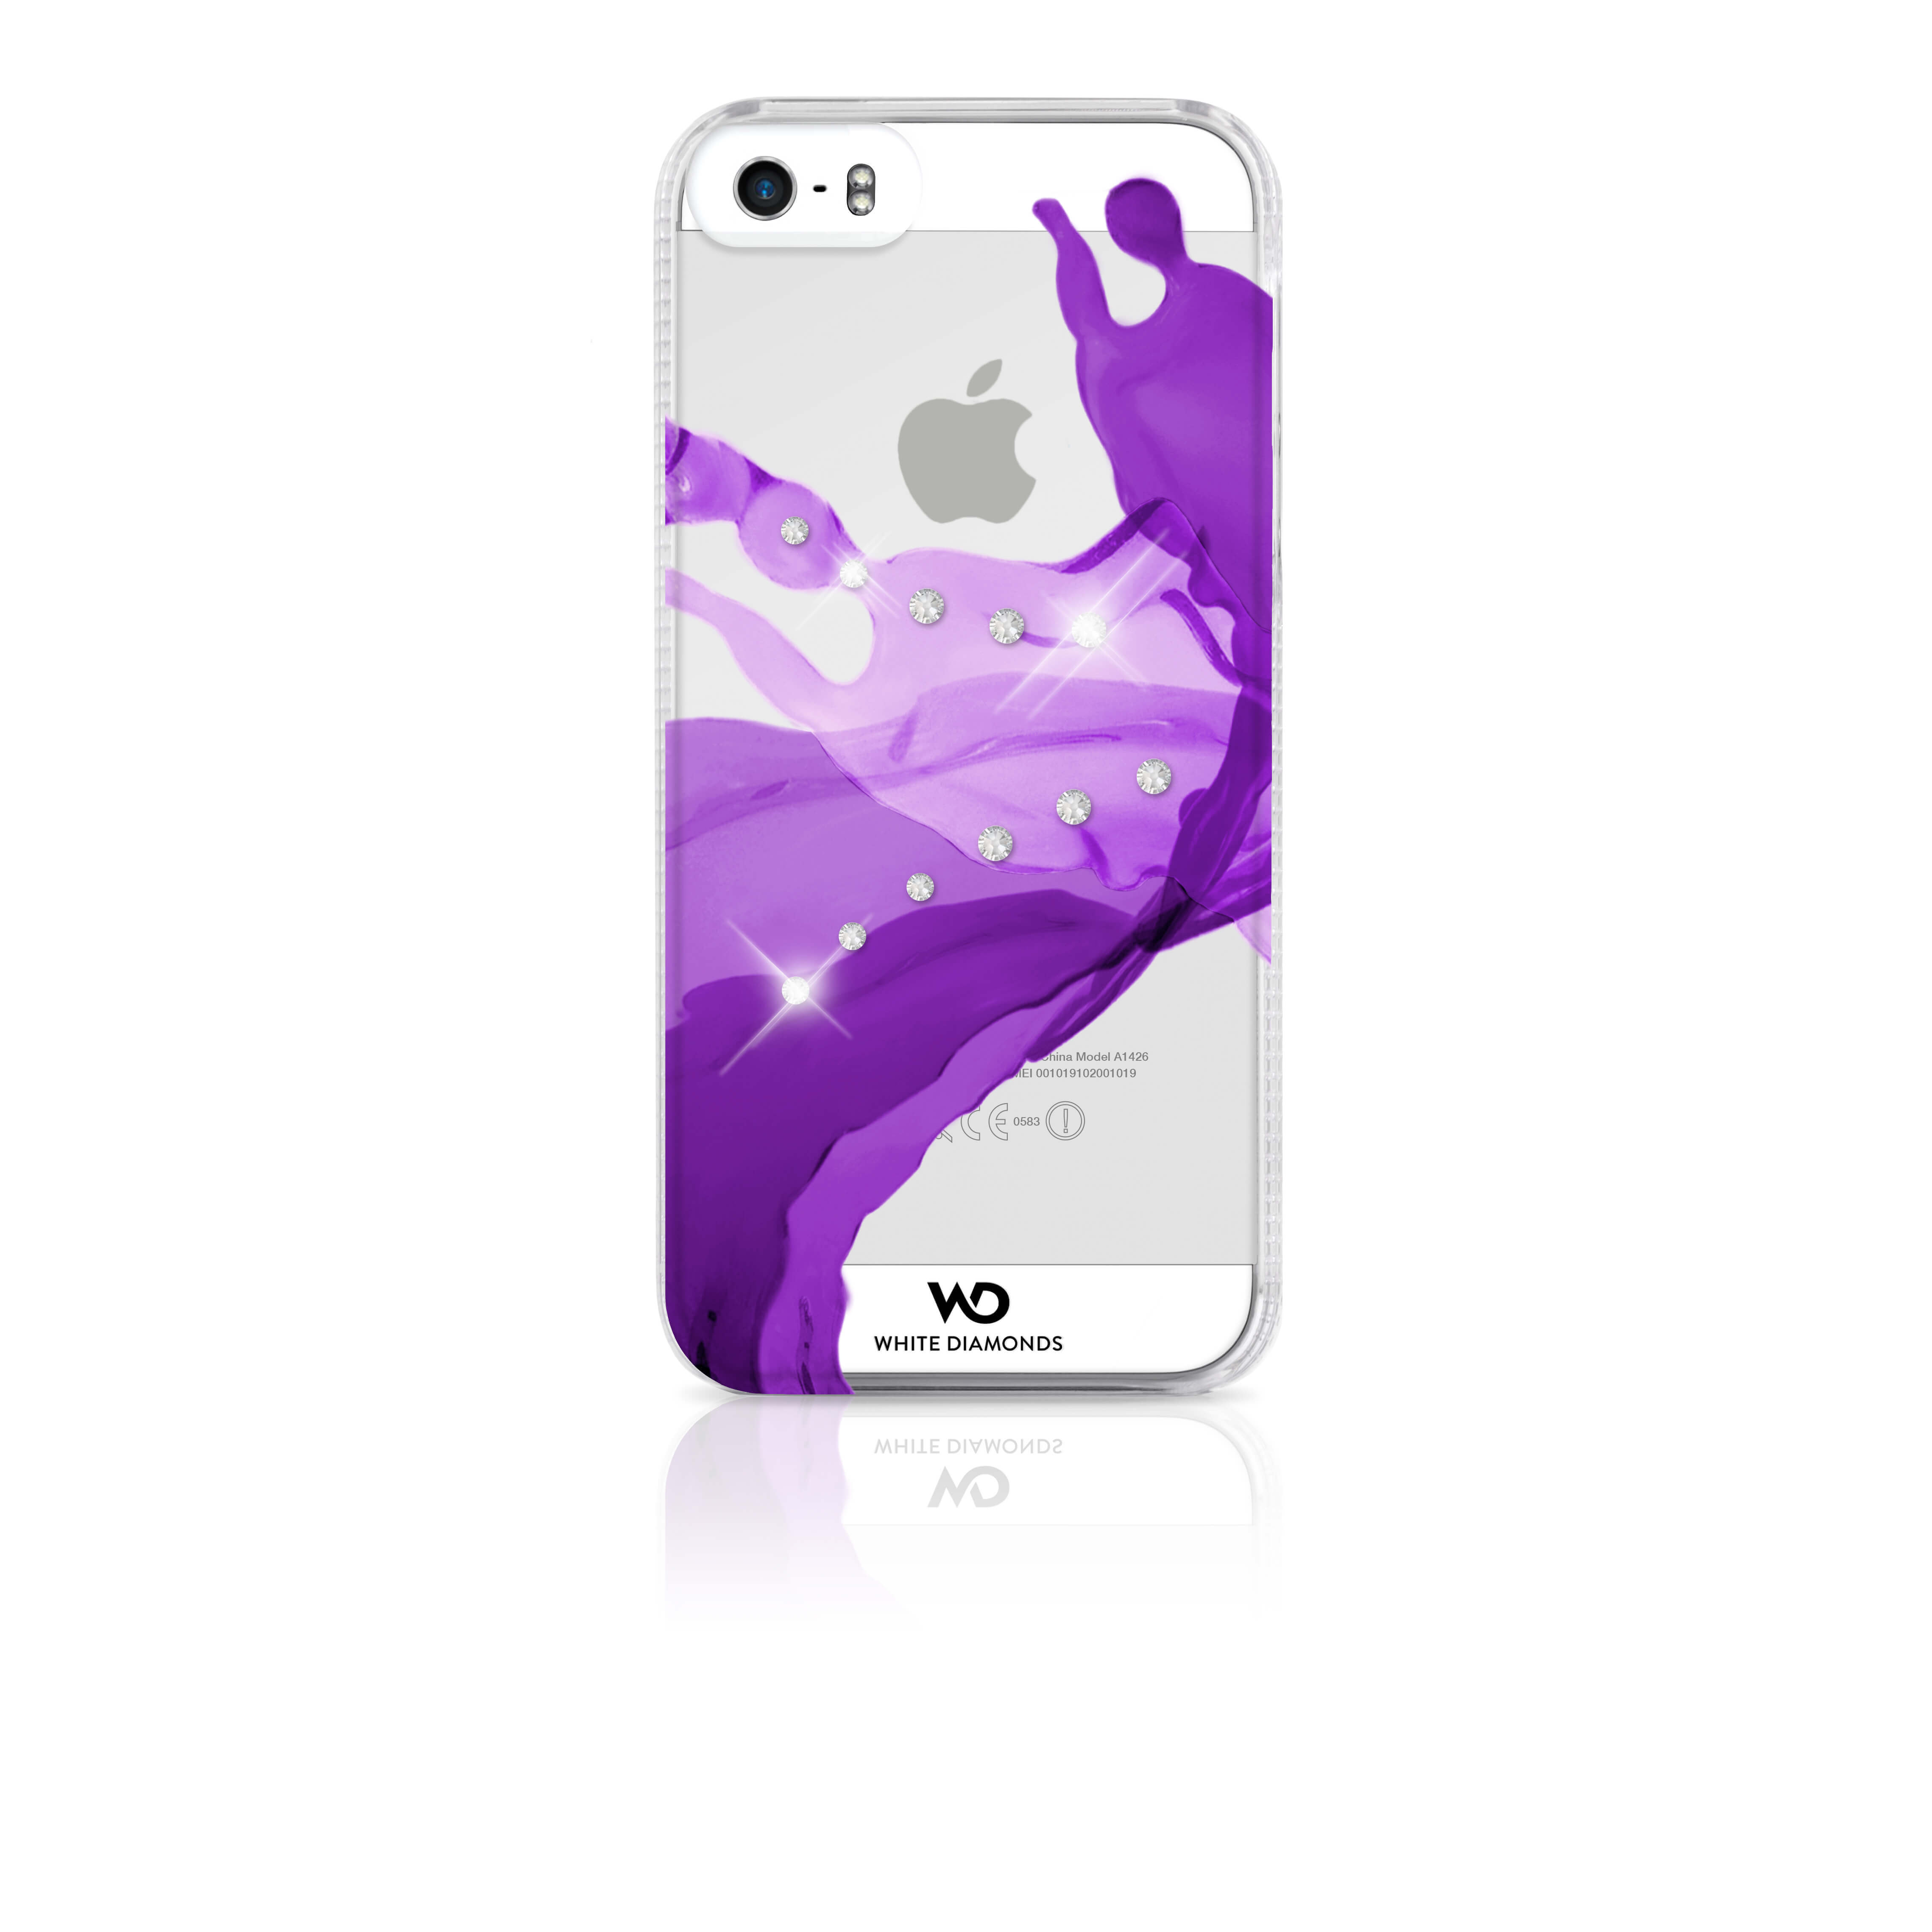 Liquids Mobile Phone Cover iPhone 5/5s/SE, purple